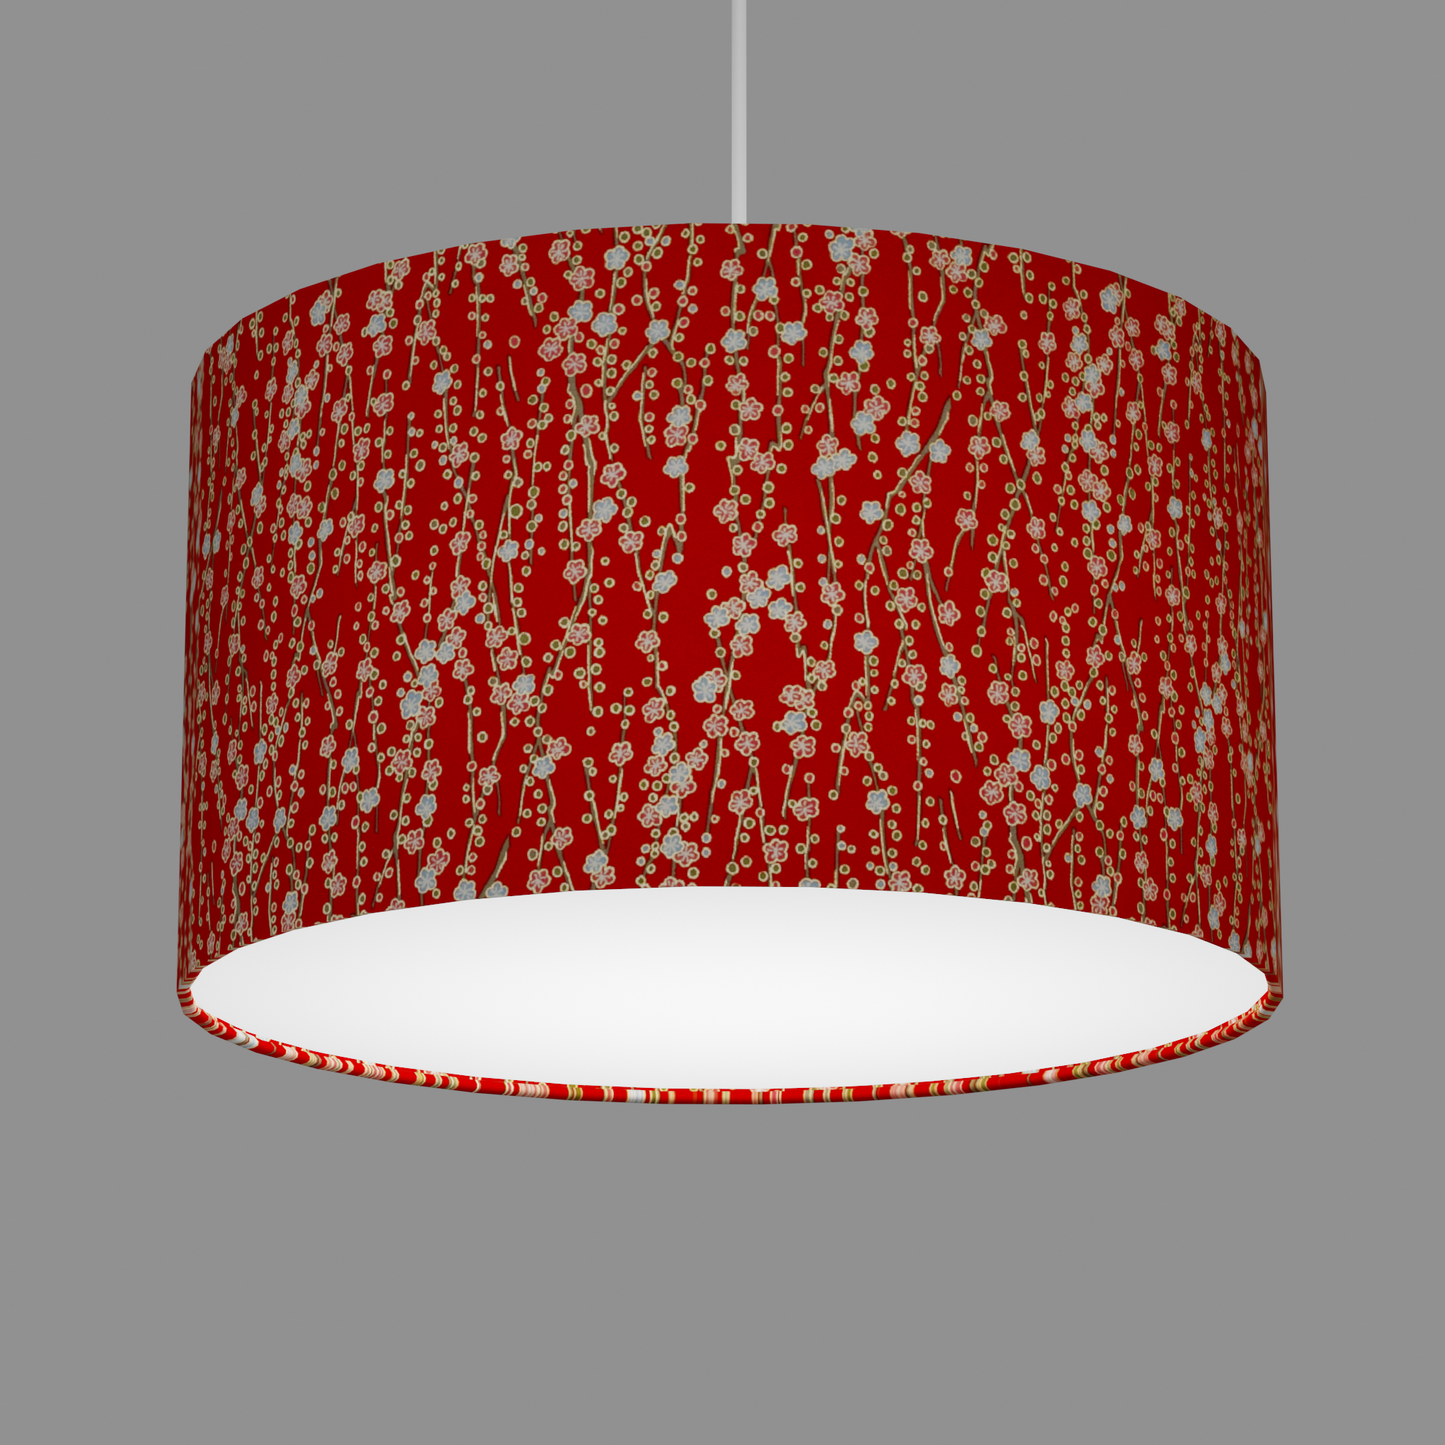 Drum Lamp Shade - W01 ~ Red Daisies, 35cm(d) x 20cm(h)